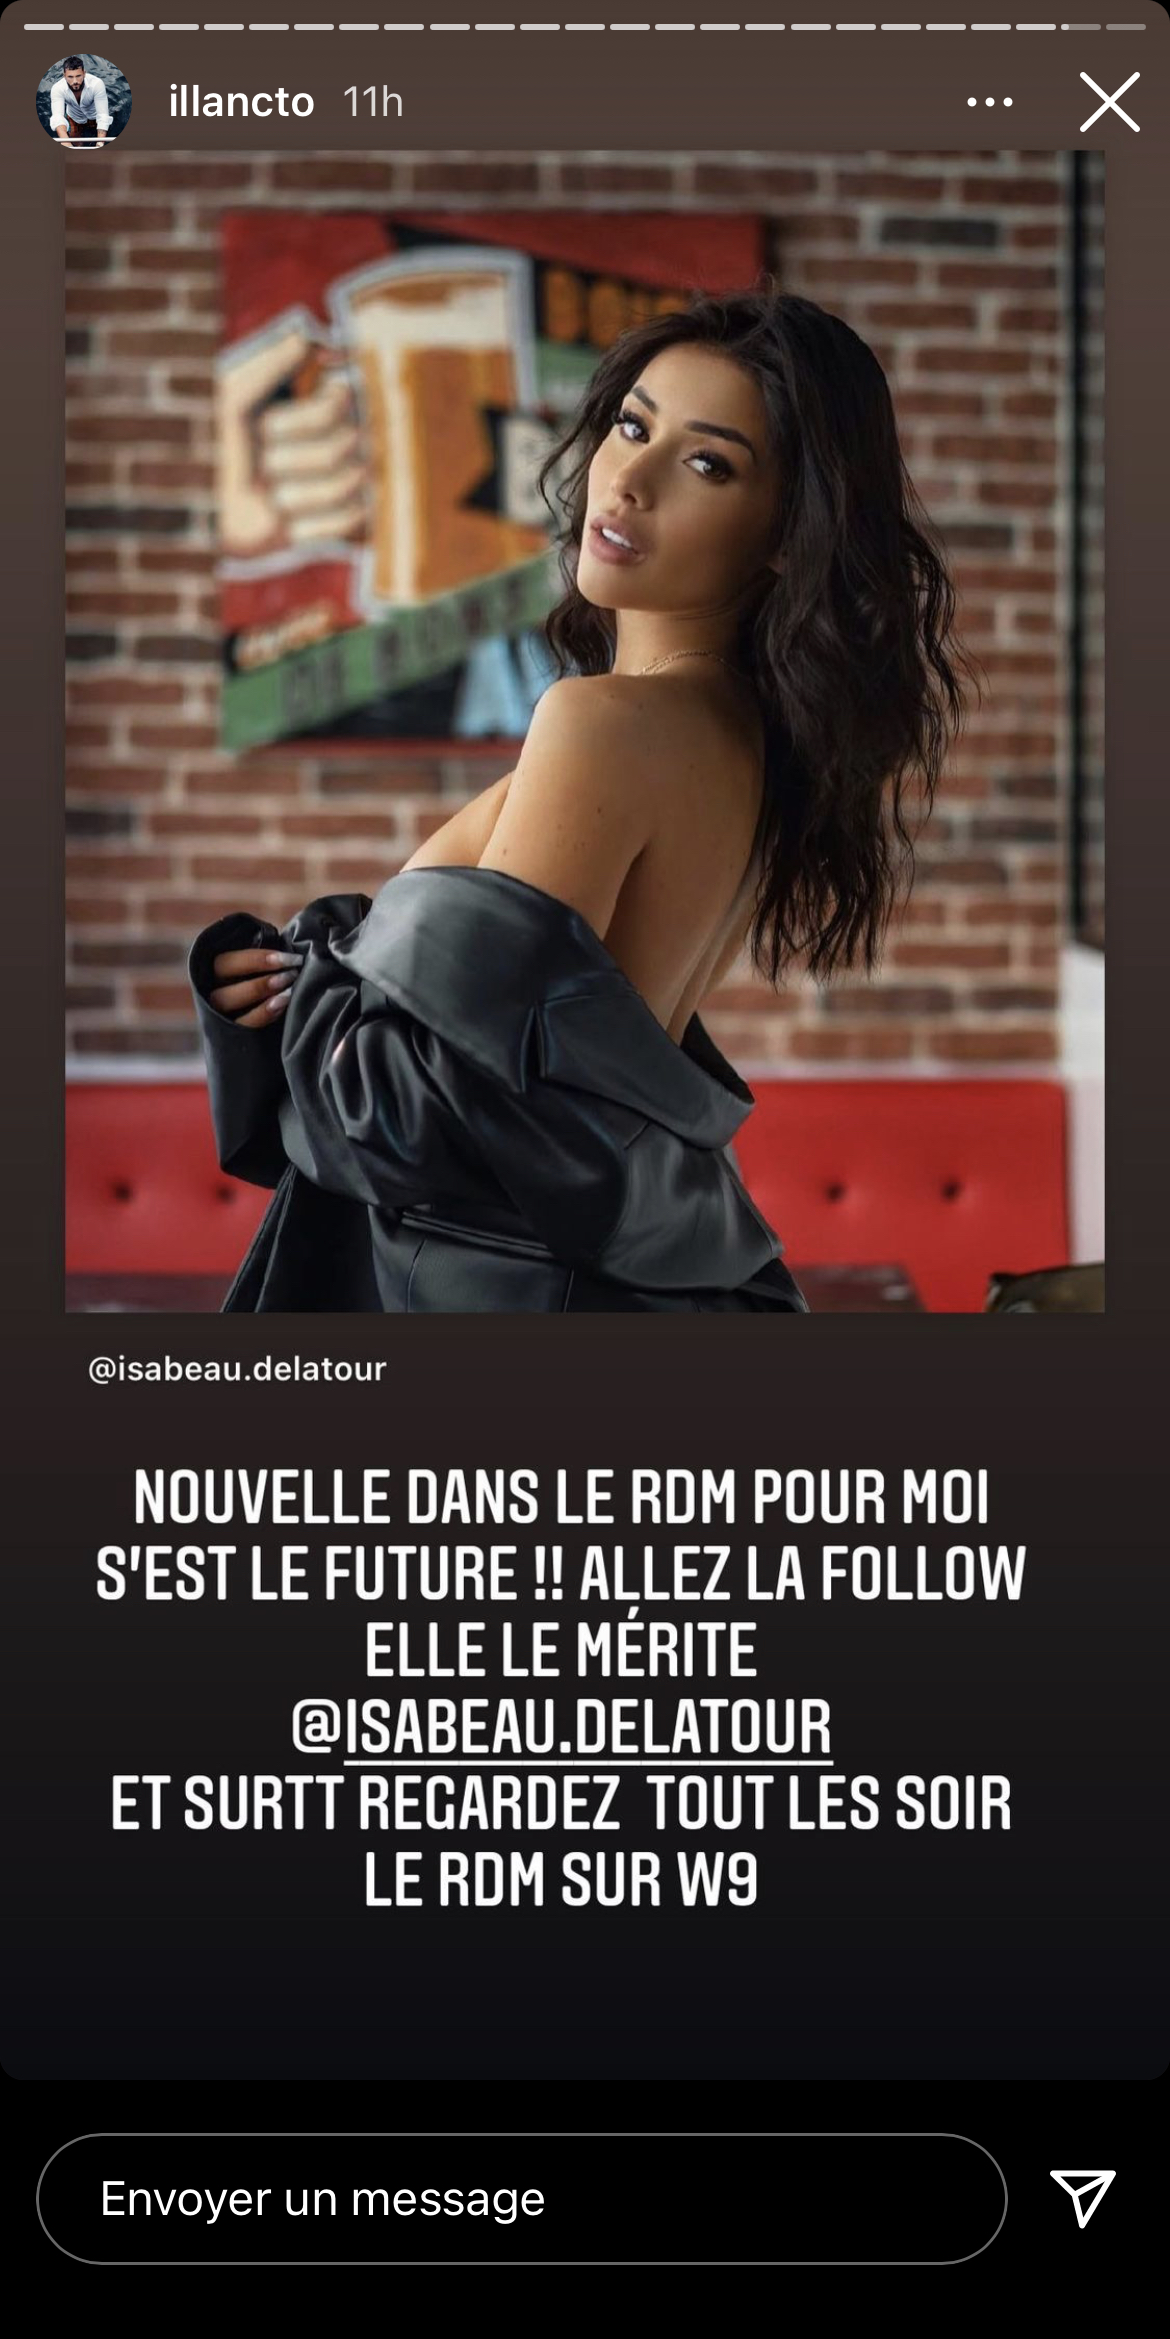  Illan s'affiche au restaurant avec Isabeau @ Instagram